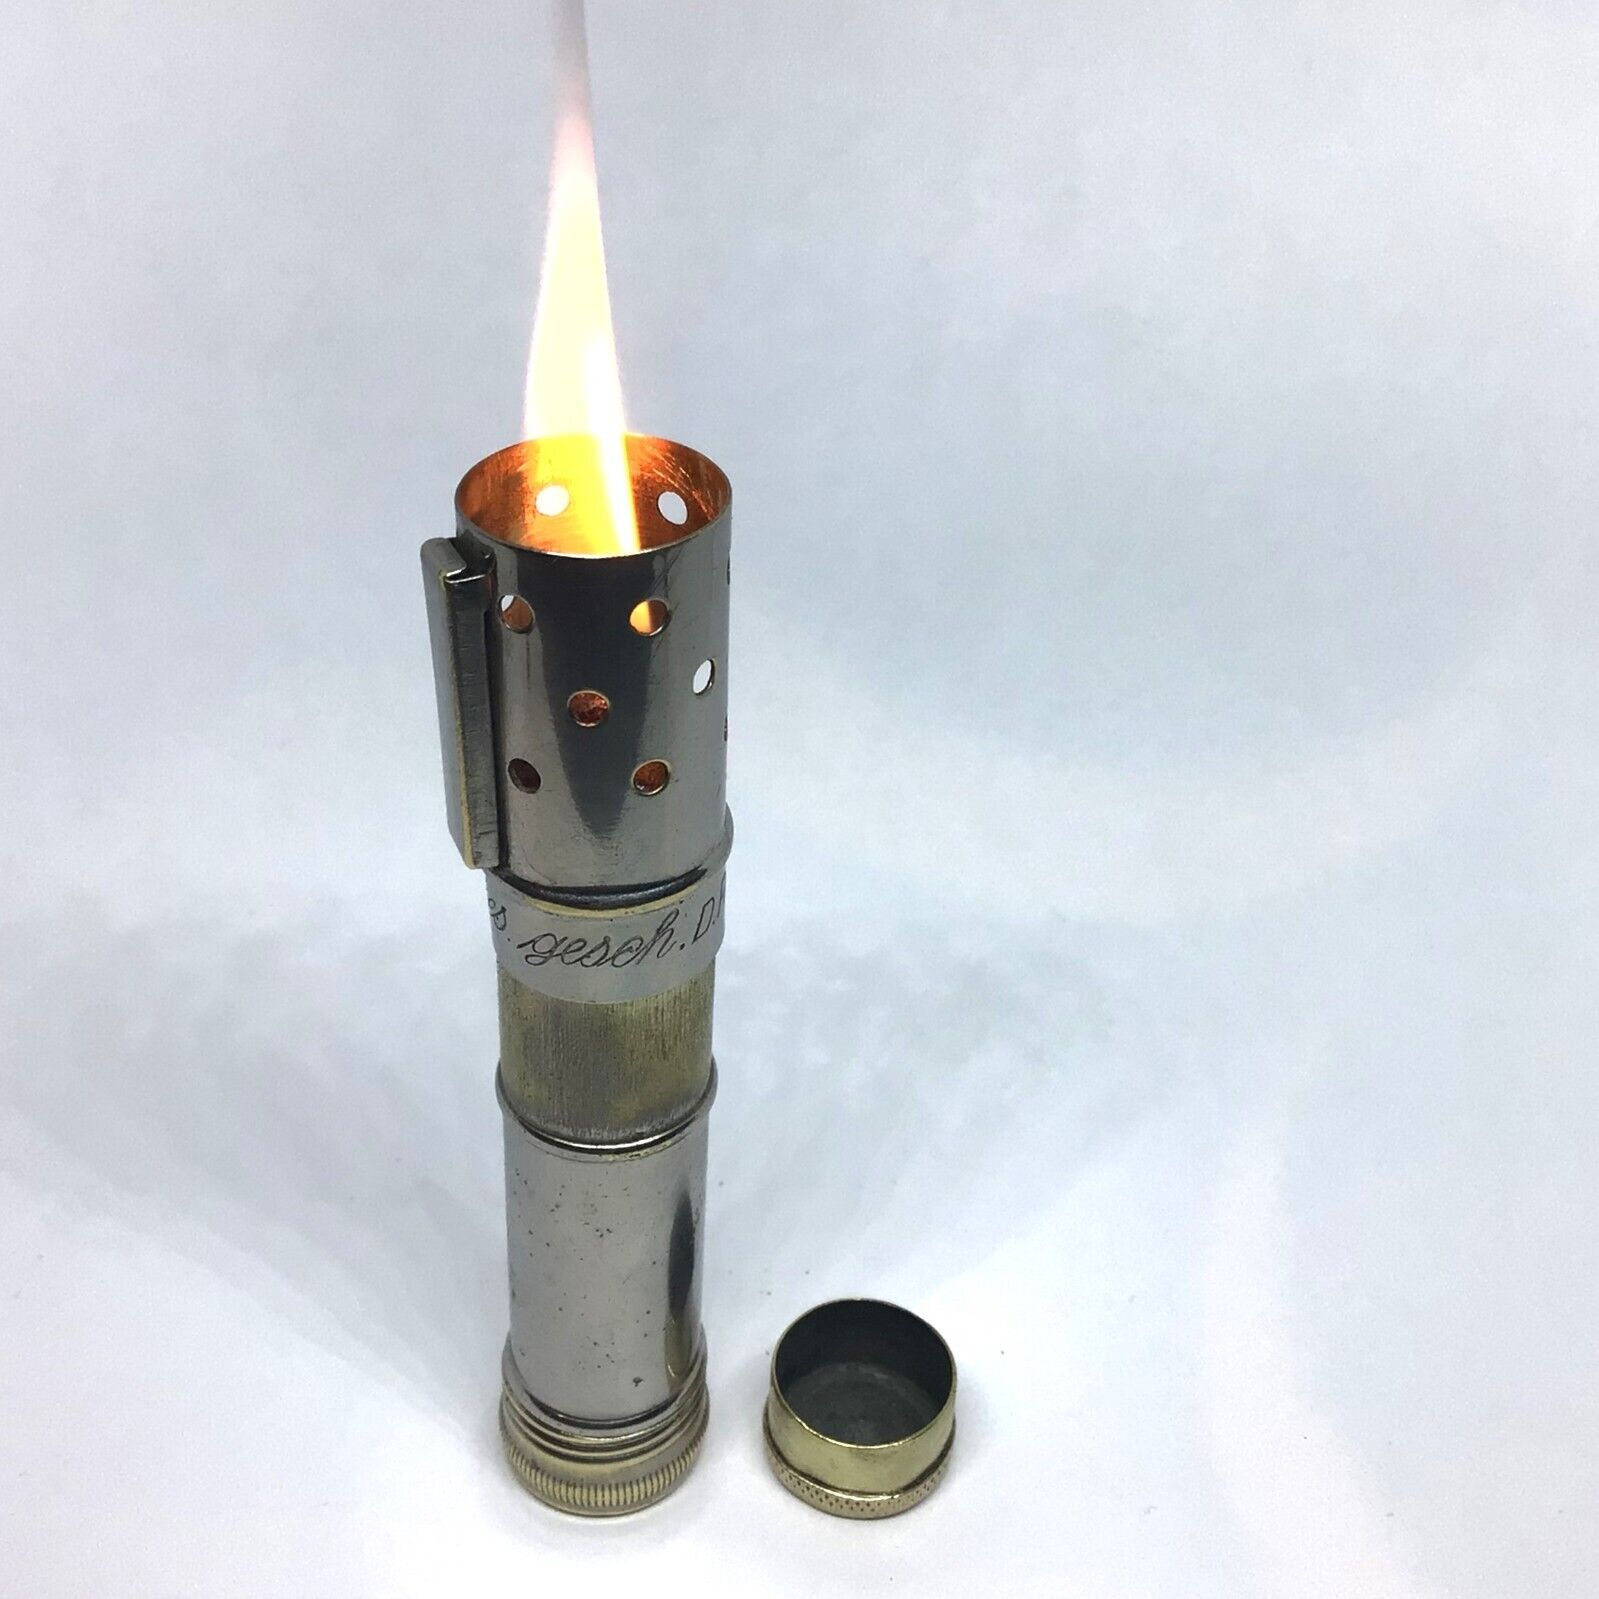 -17- Briquet Essence Hurricane DRGM Ges Gesh - RARE - Vintage Lighter Lighter